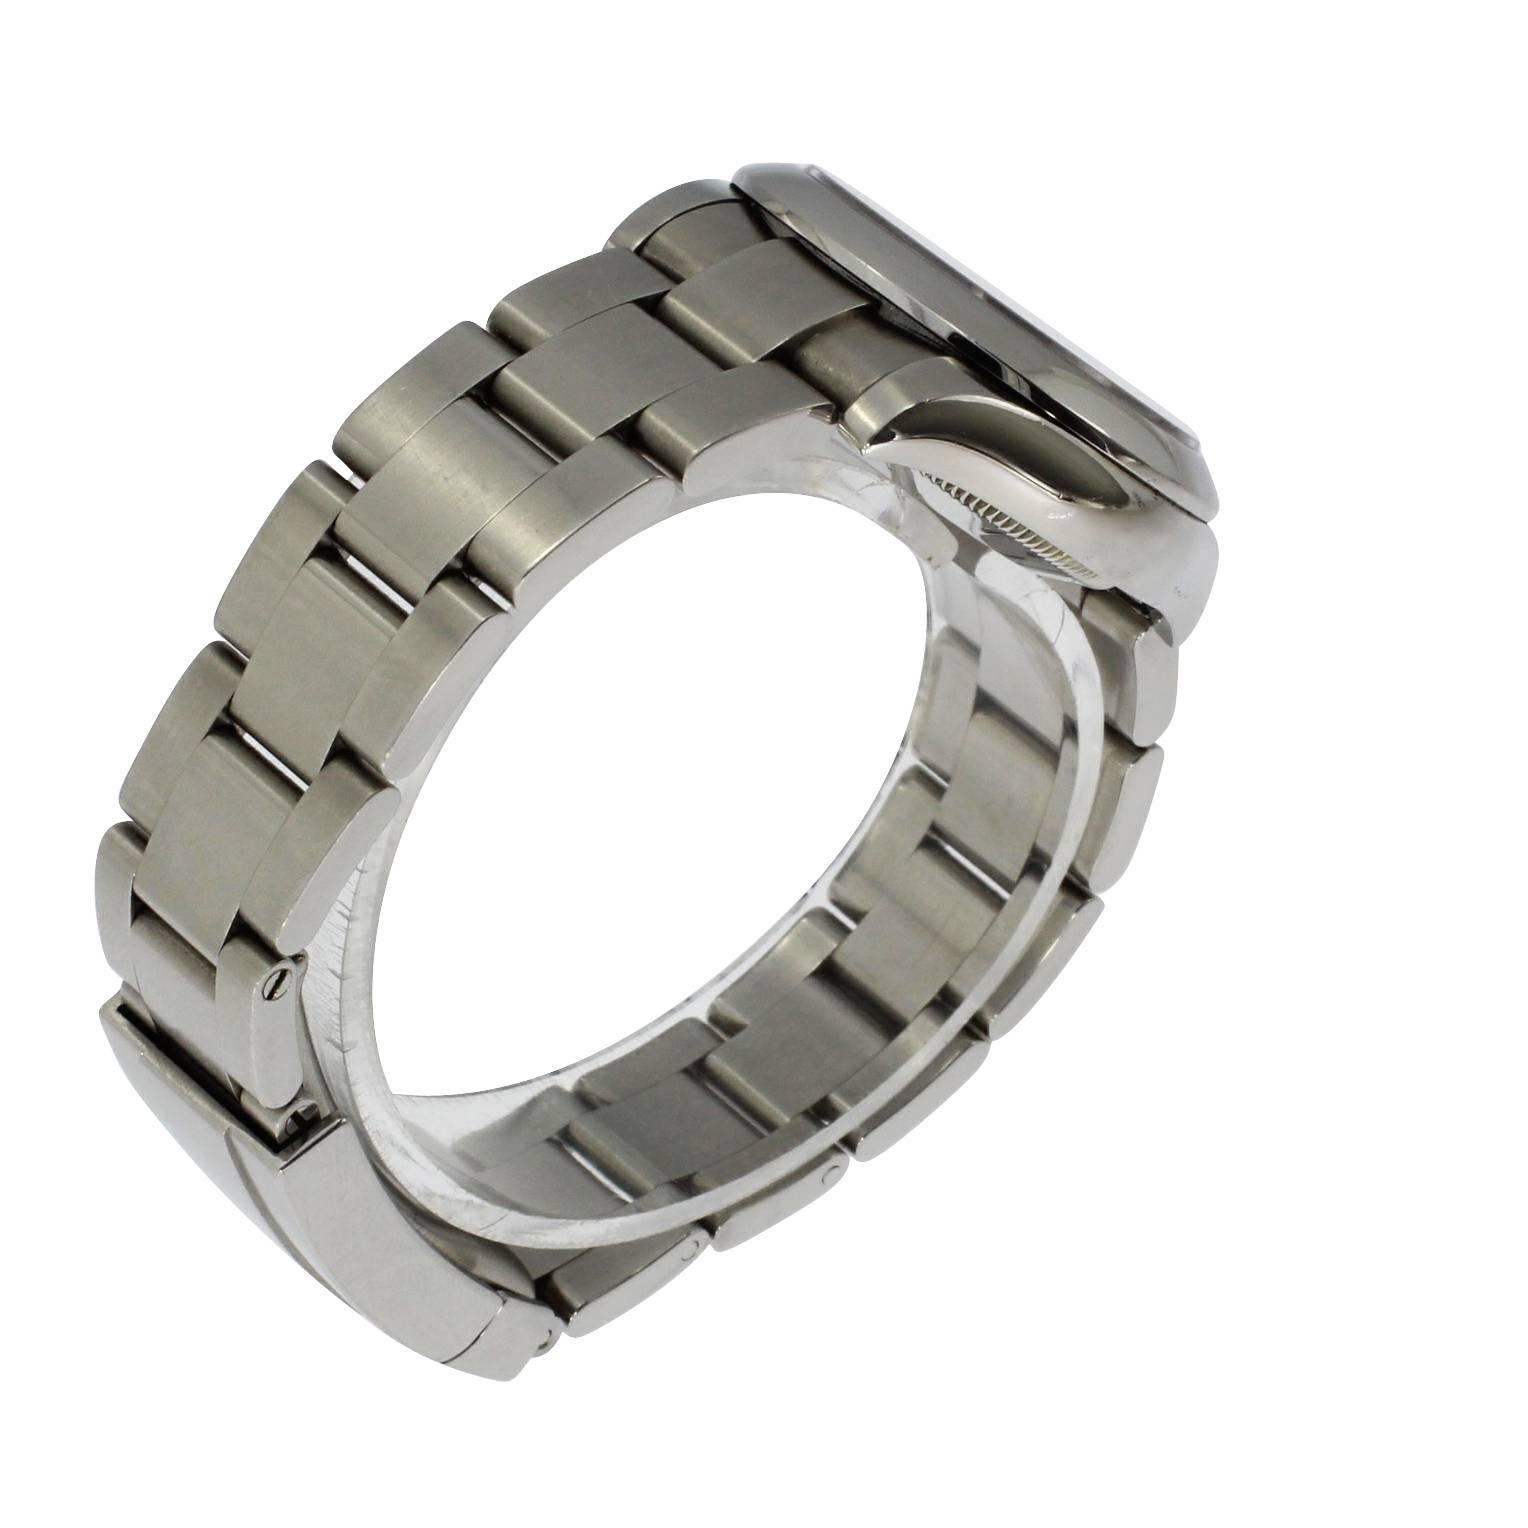 Rolex Stainless Steel Date Oyster Bracelet Midsize Wristwatch Ref 177200, 2006 For Sale 2